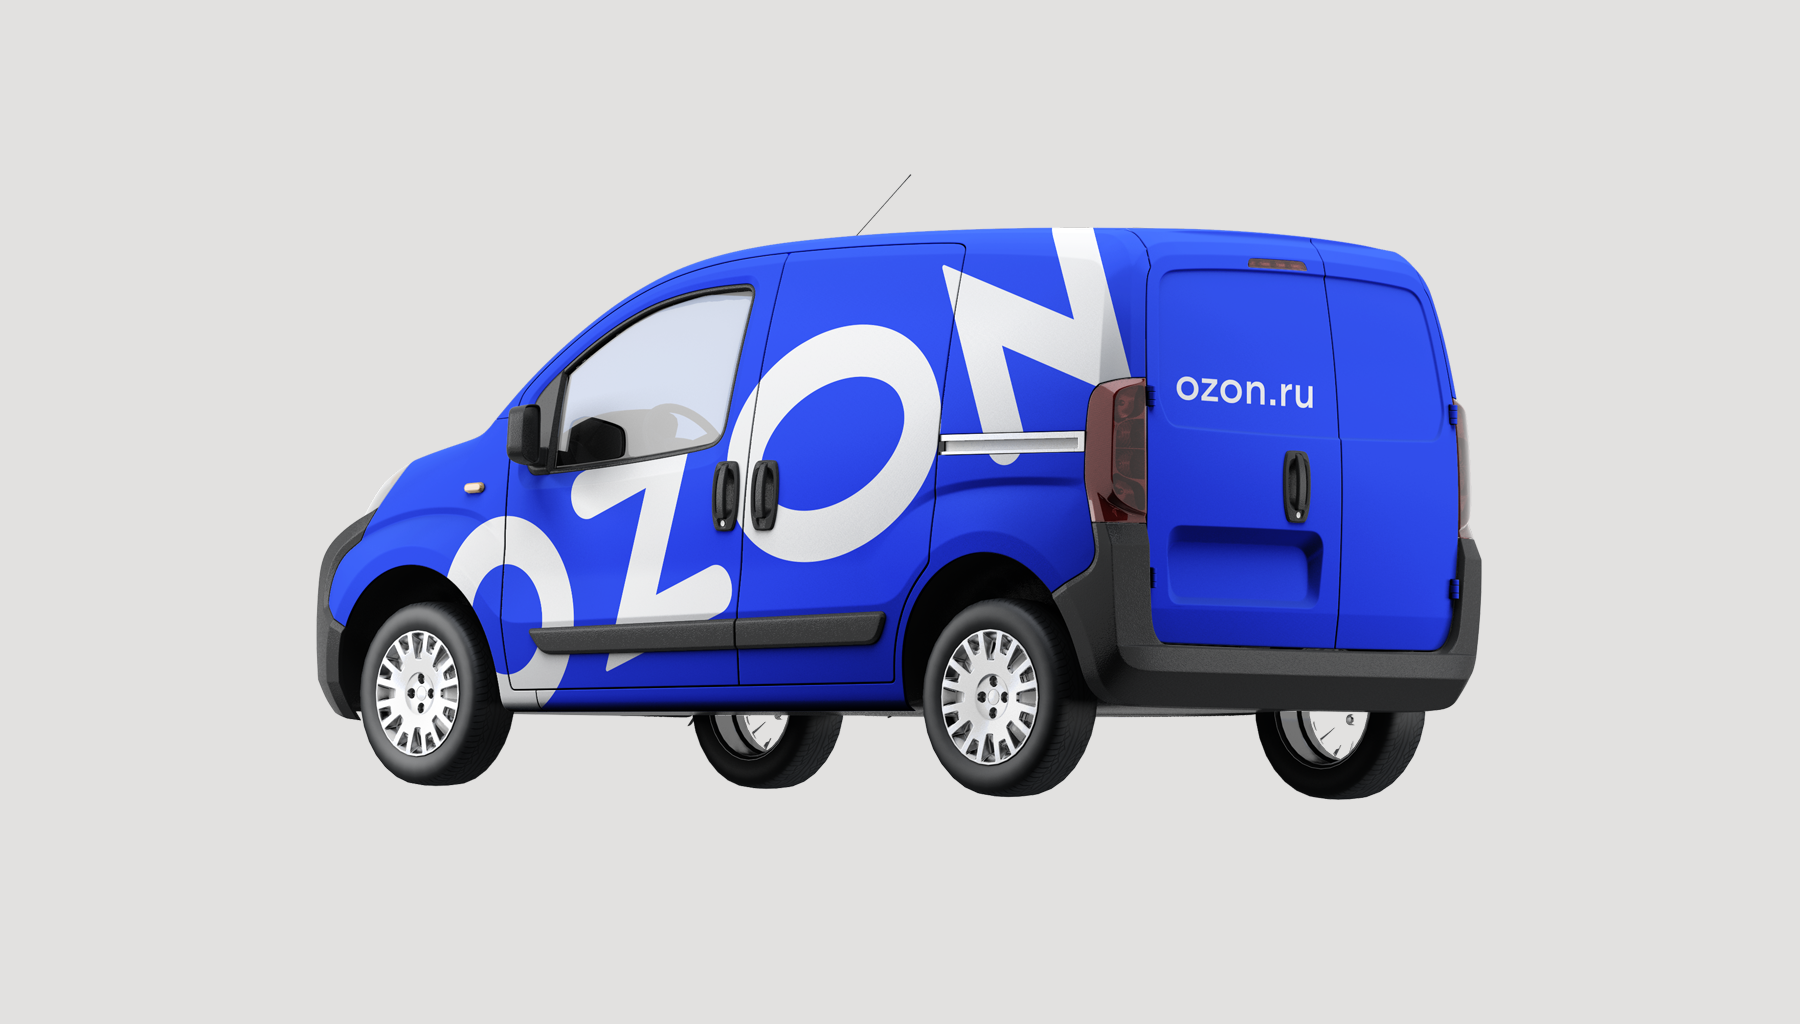 Заказать озон с бесплатной доставкой на дом. Ford Transit Озон. Фургоны Озон Форд Транзит. Фургон Озон. Машина Озон доставка.